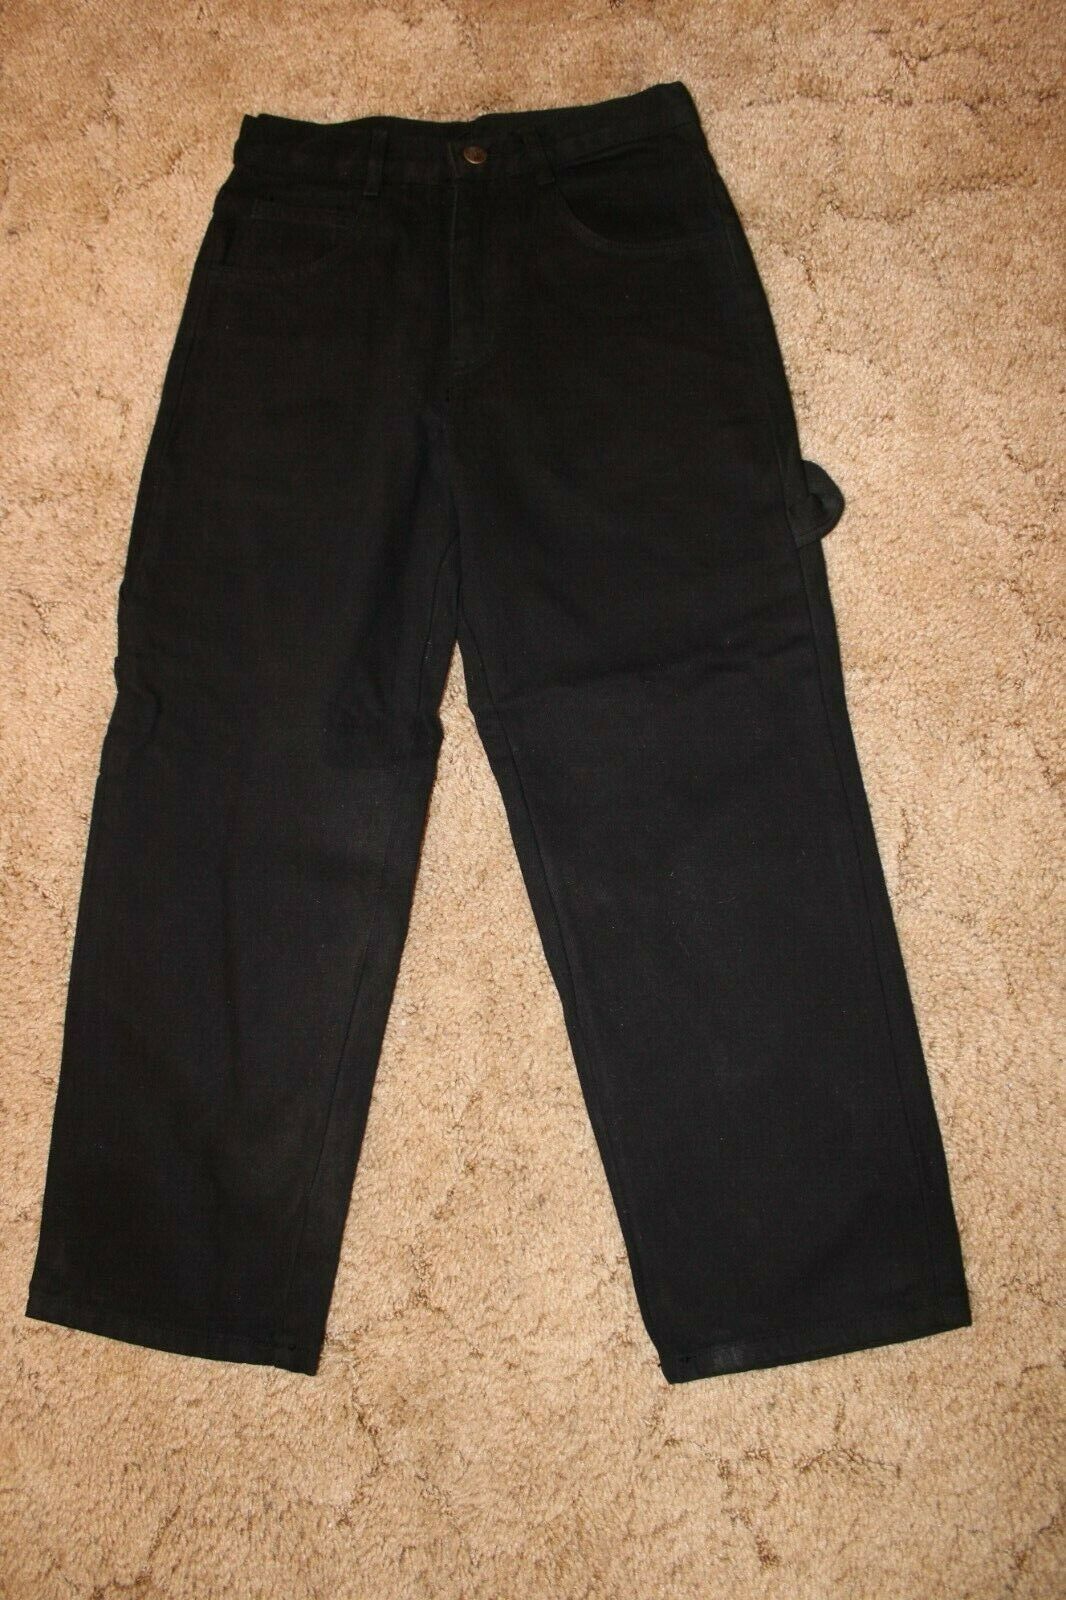 Polo Game Embroidered Boy's Black Pants Size 7/8 27 waist x 24 Length - $15.79